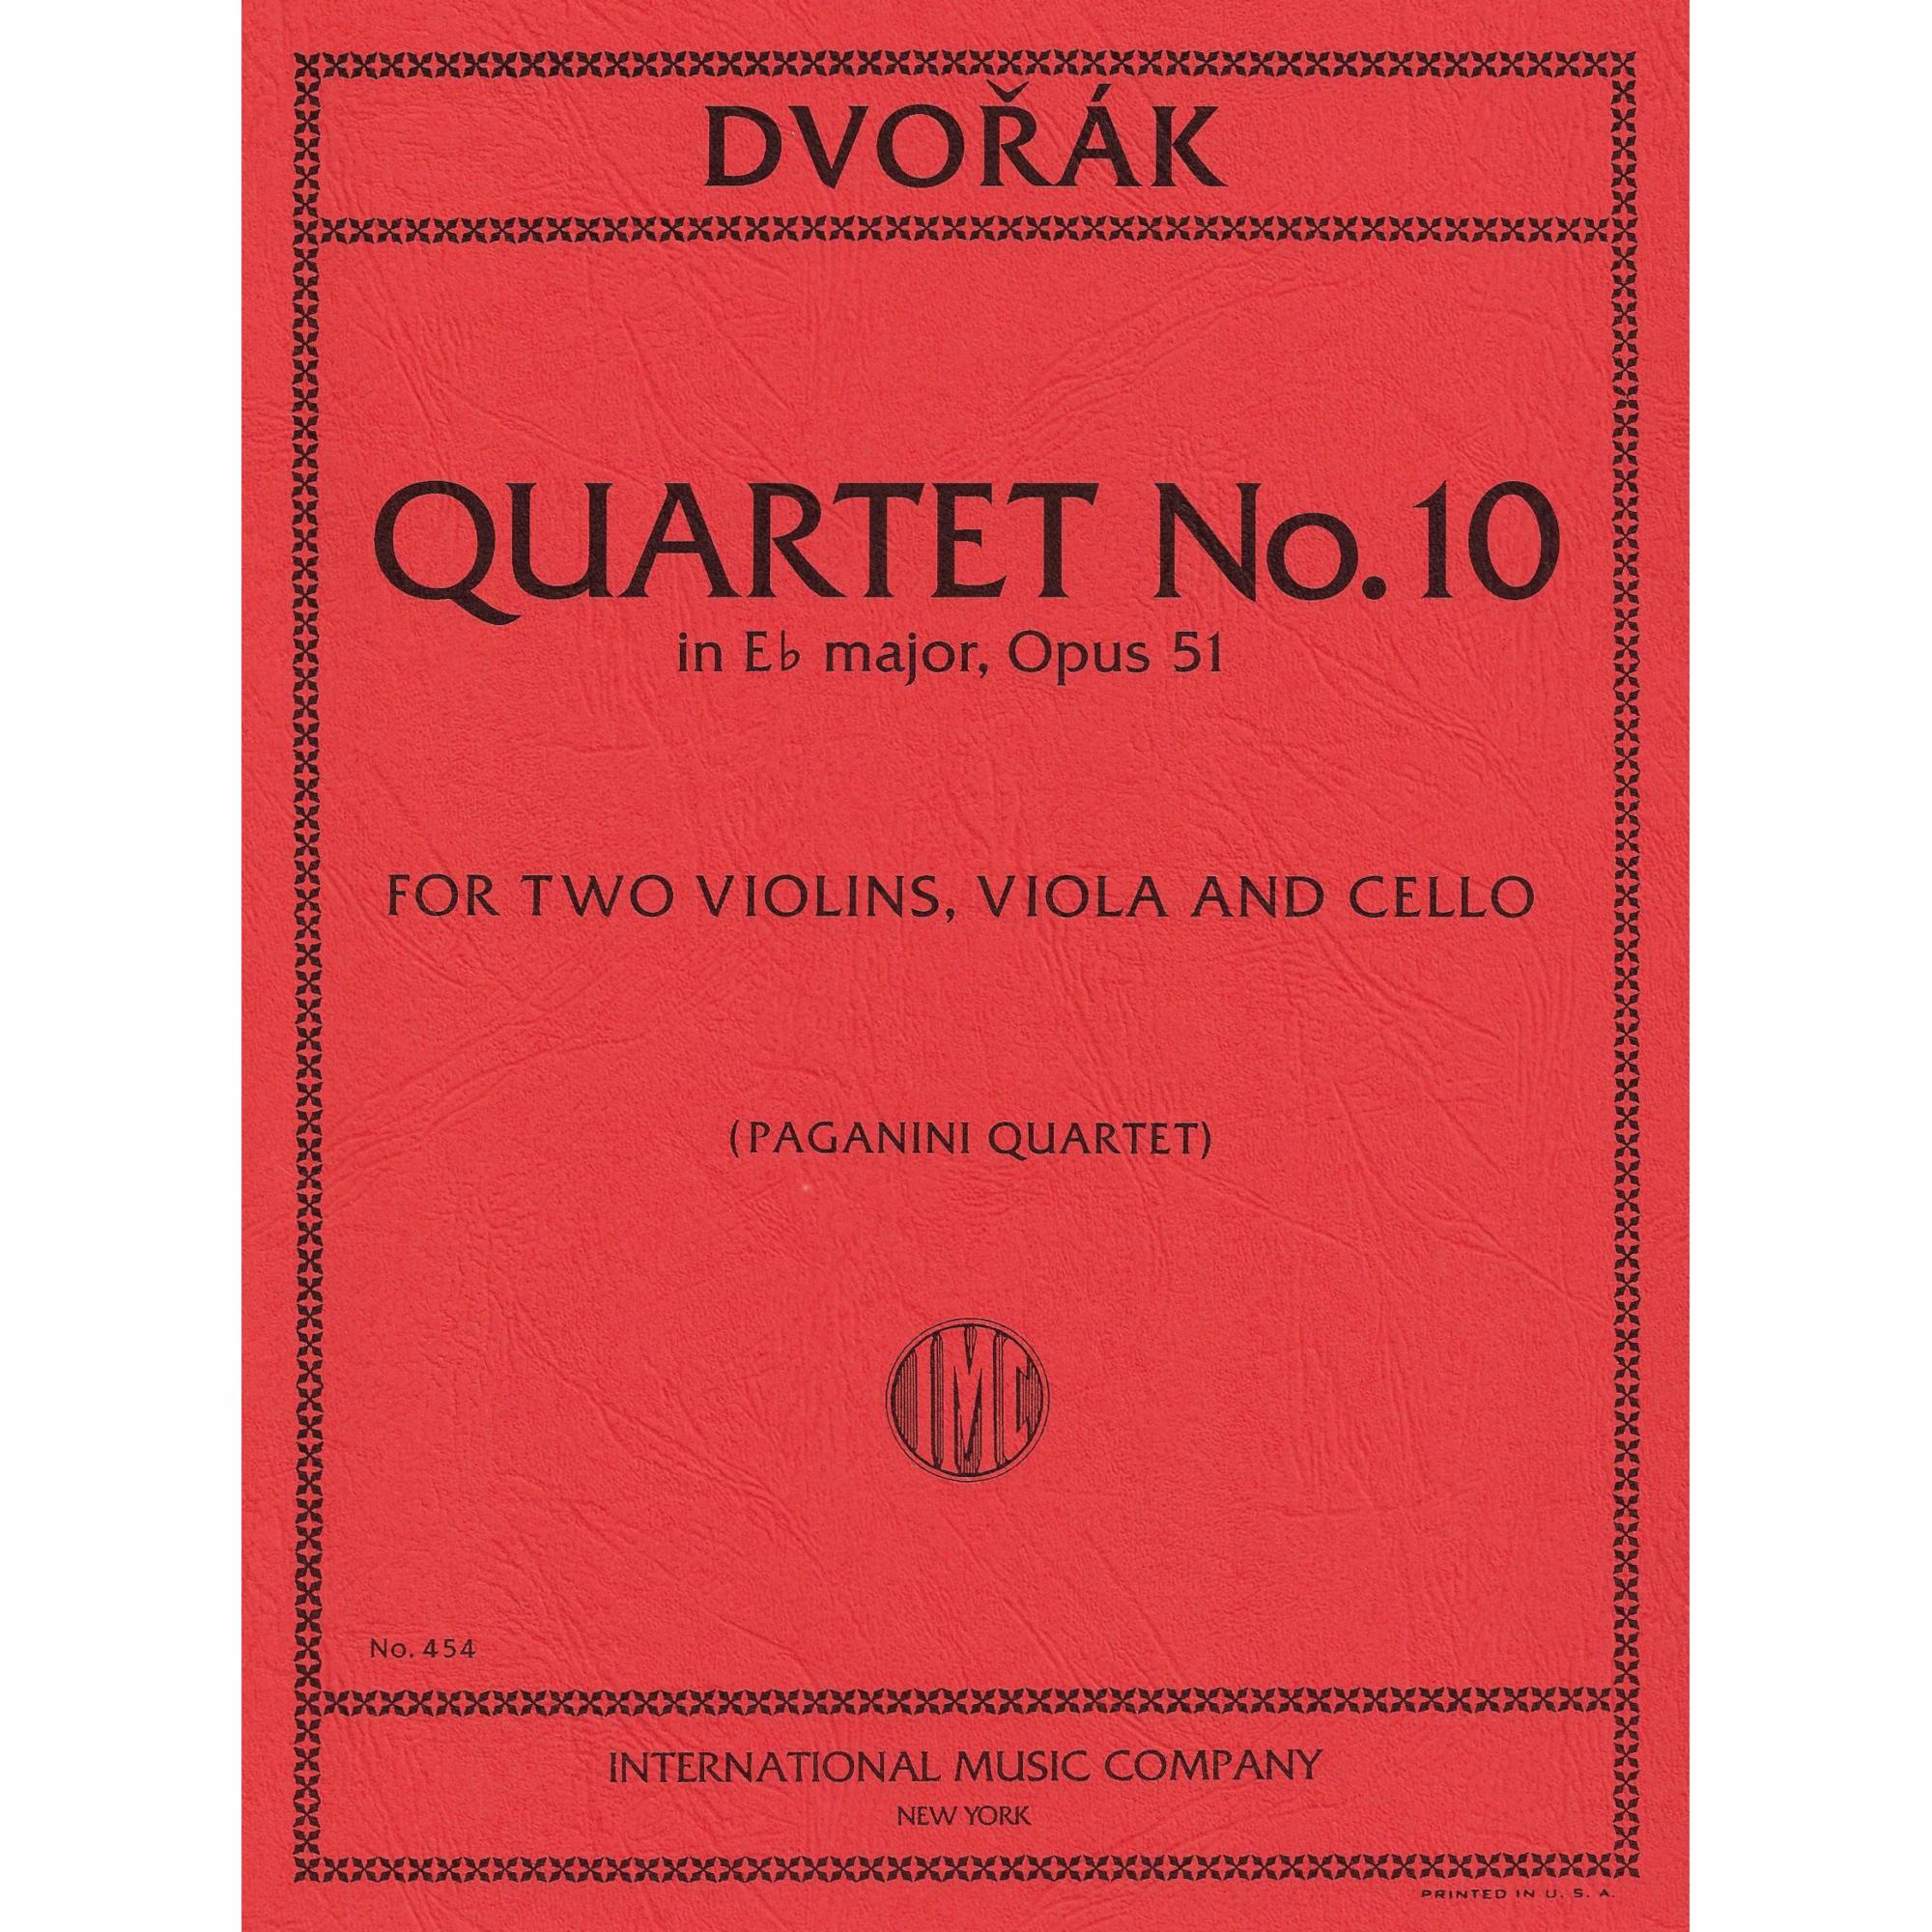 Dvorak -- Quartet No. 10 in E-flat Major, Op. 51